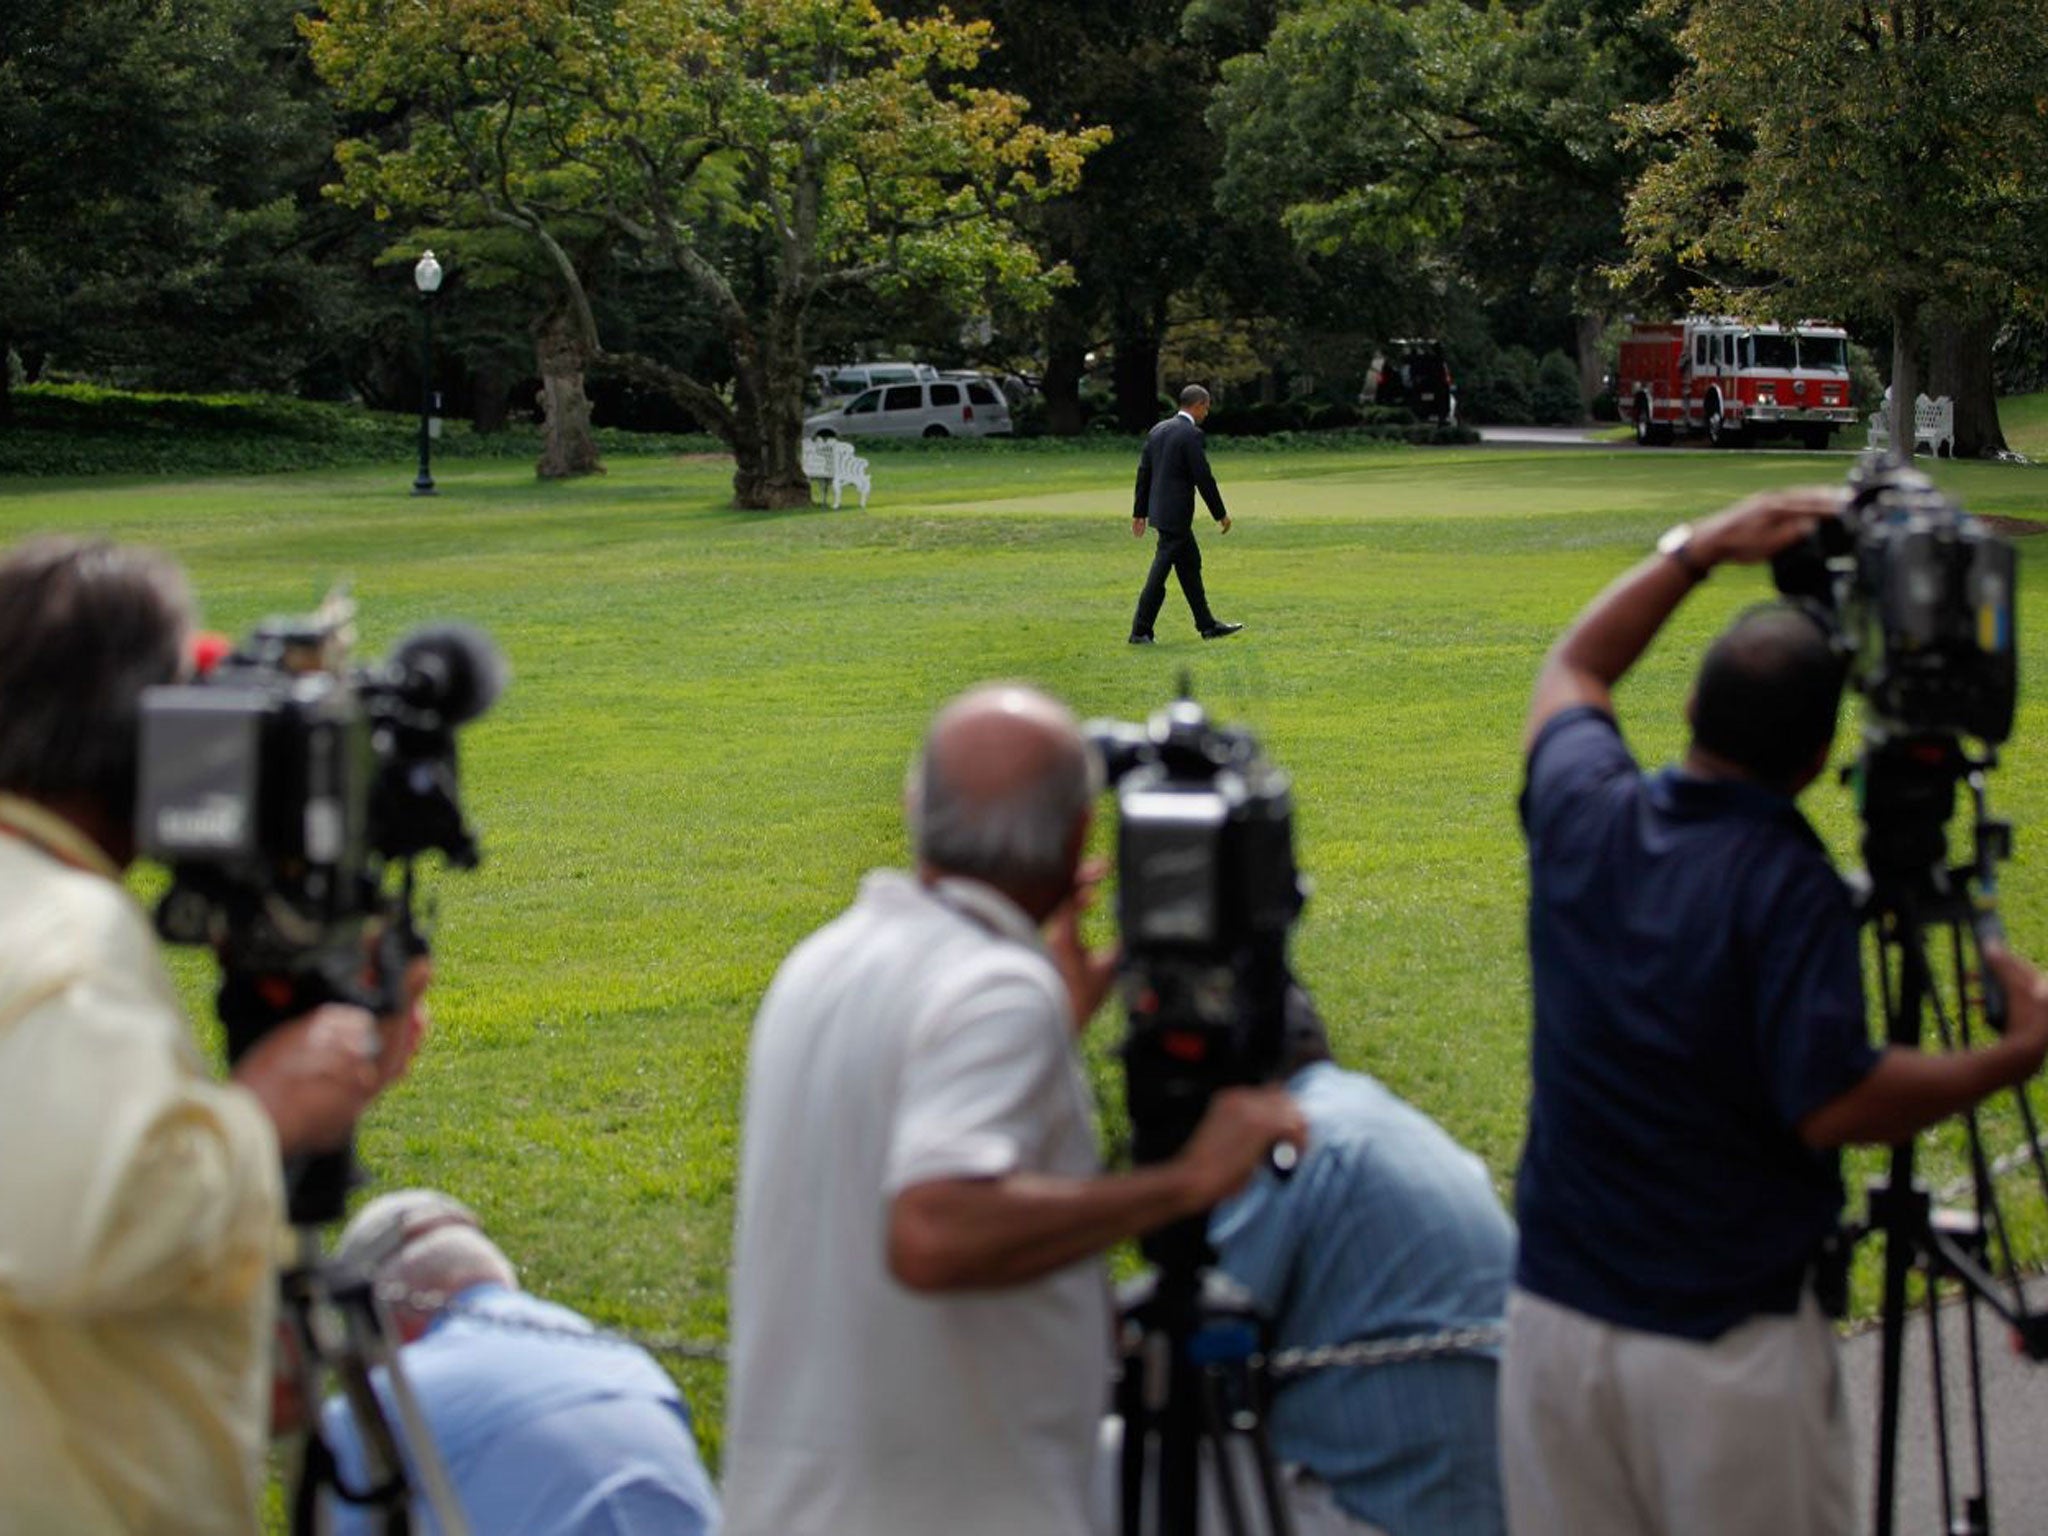 Free press? Cameras follow Barack Obama at the White House